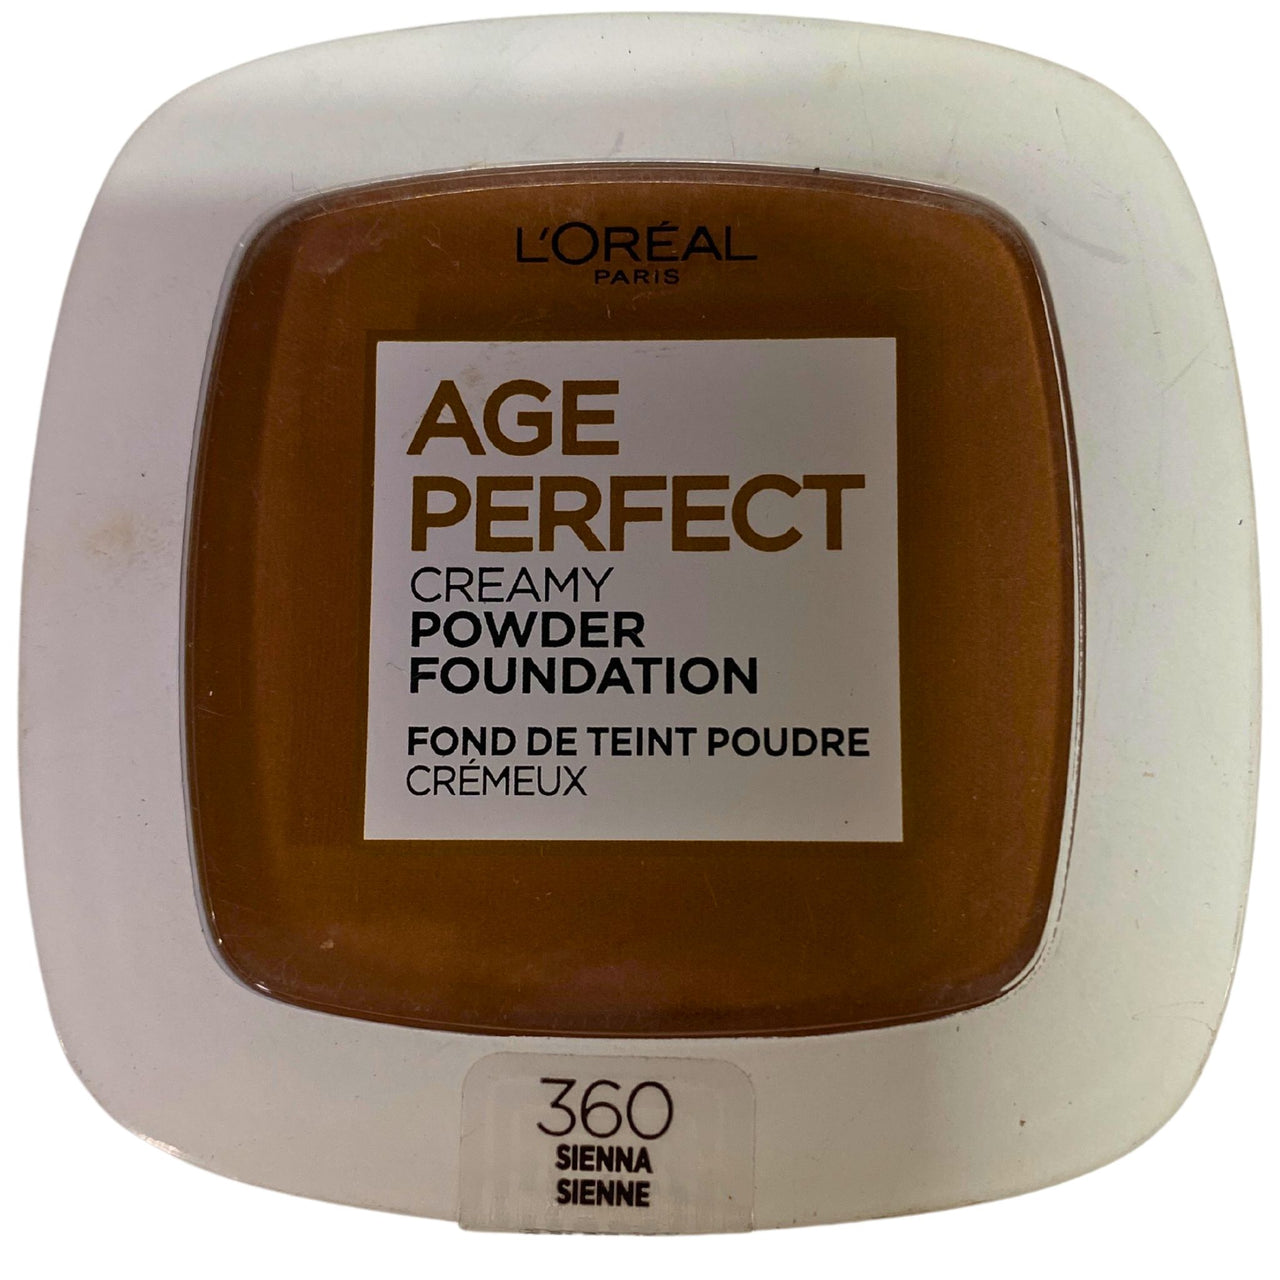 L'Oreal Paris Age Perfect Creamy Powder Foundation 360 Sienna